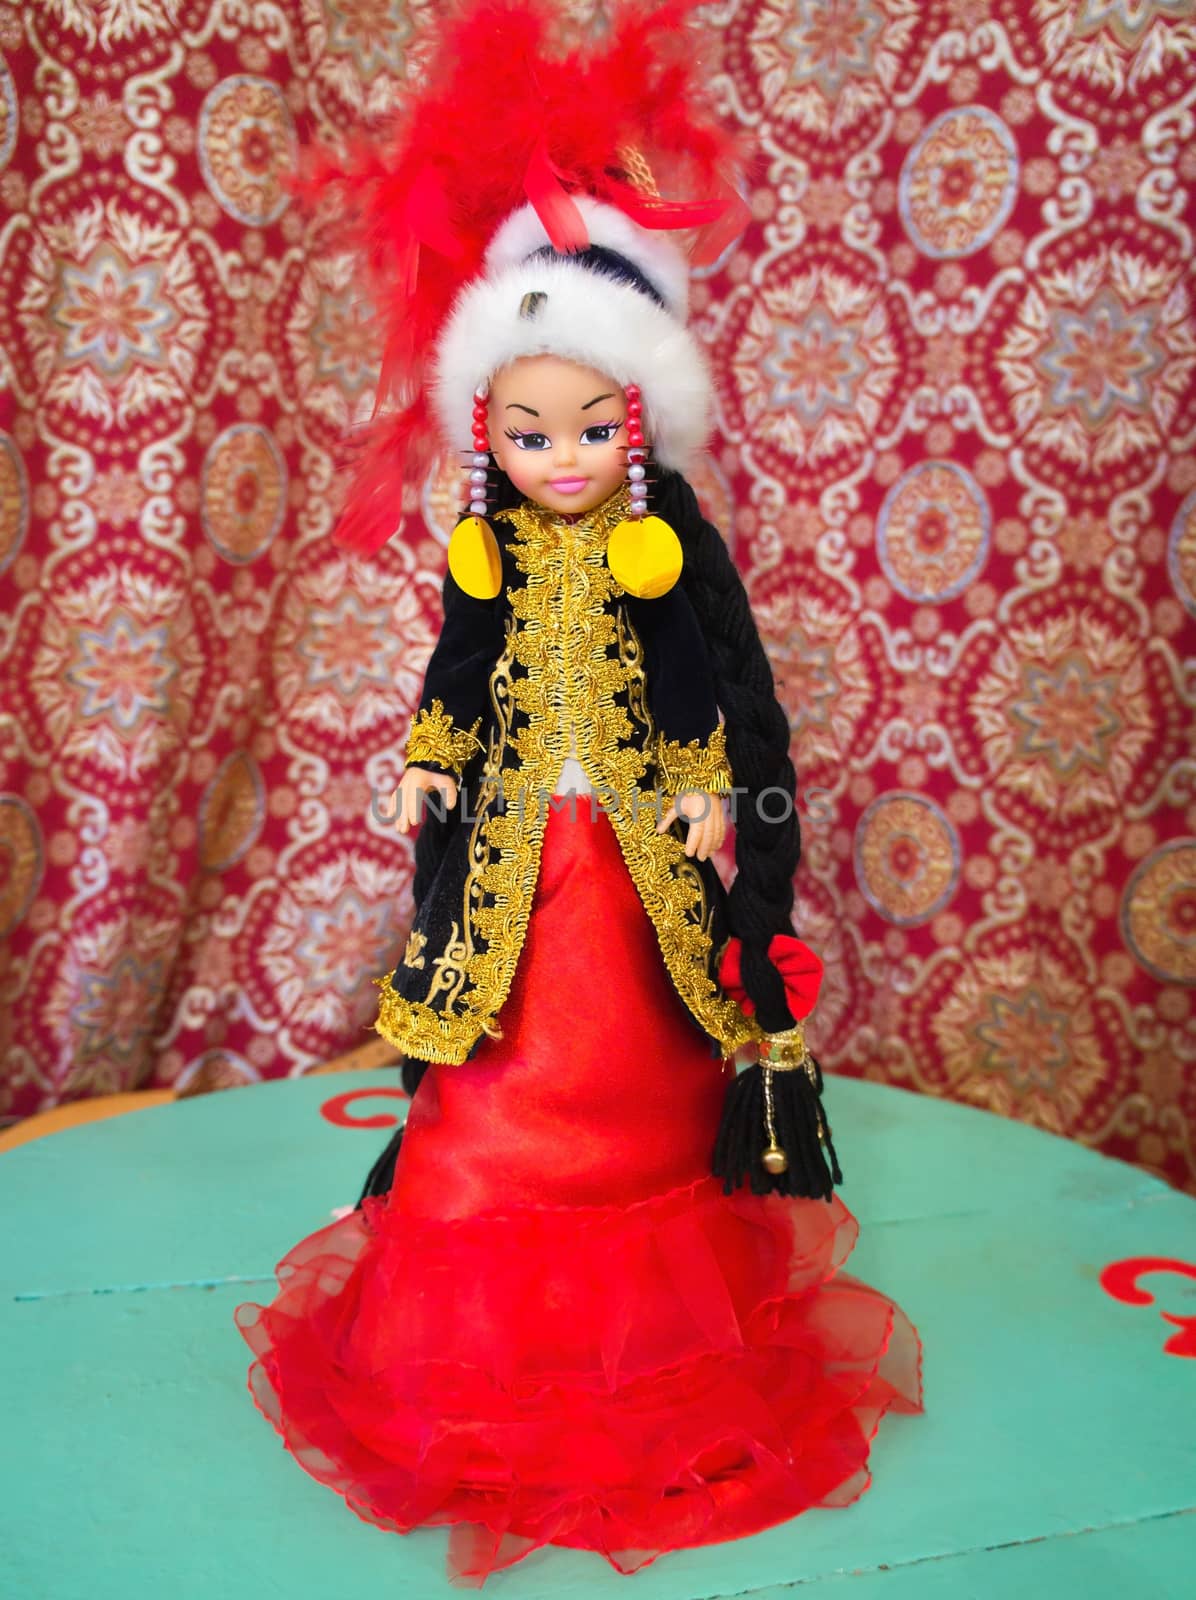 Kazakh doll by Venakr